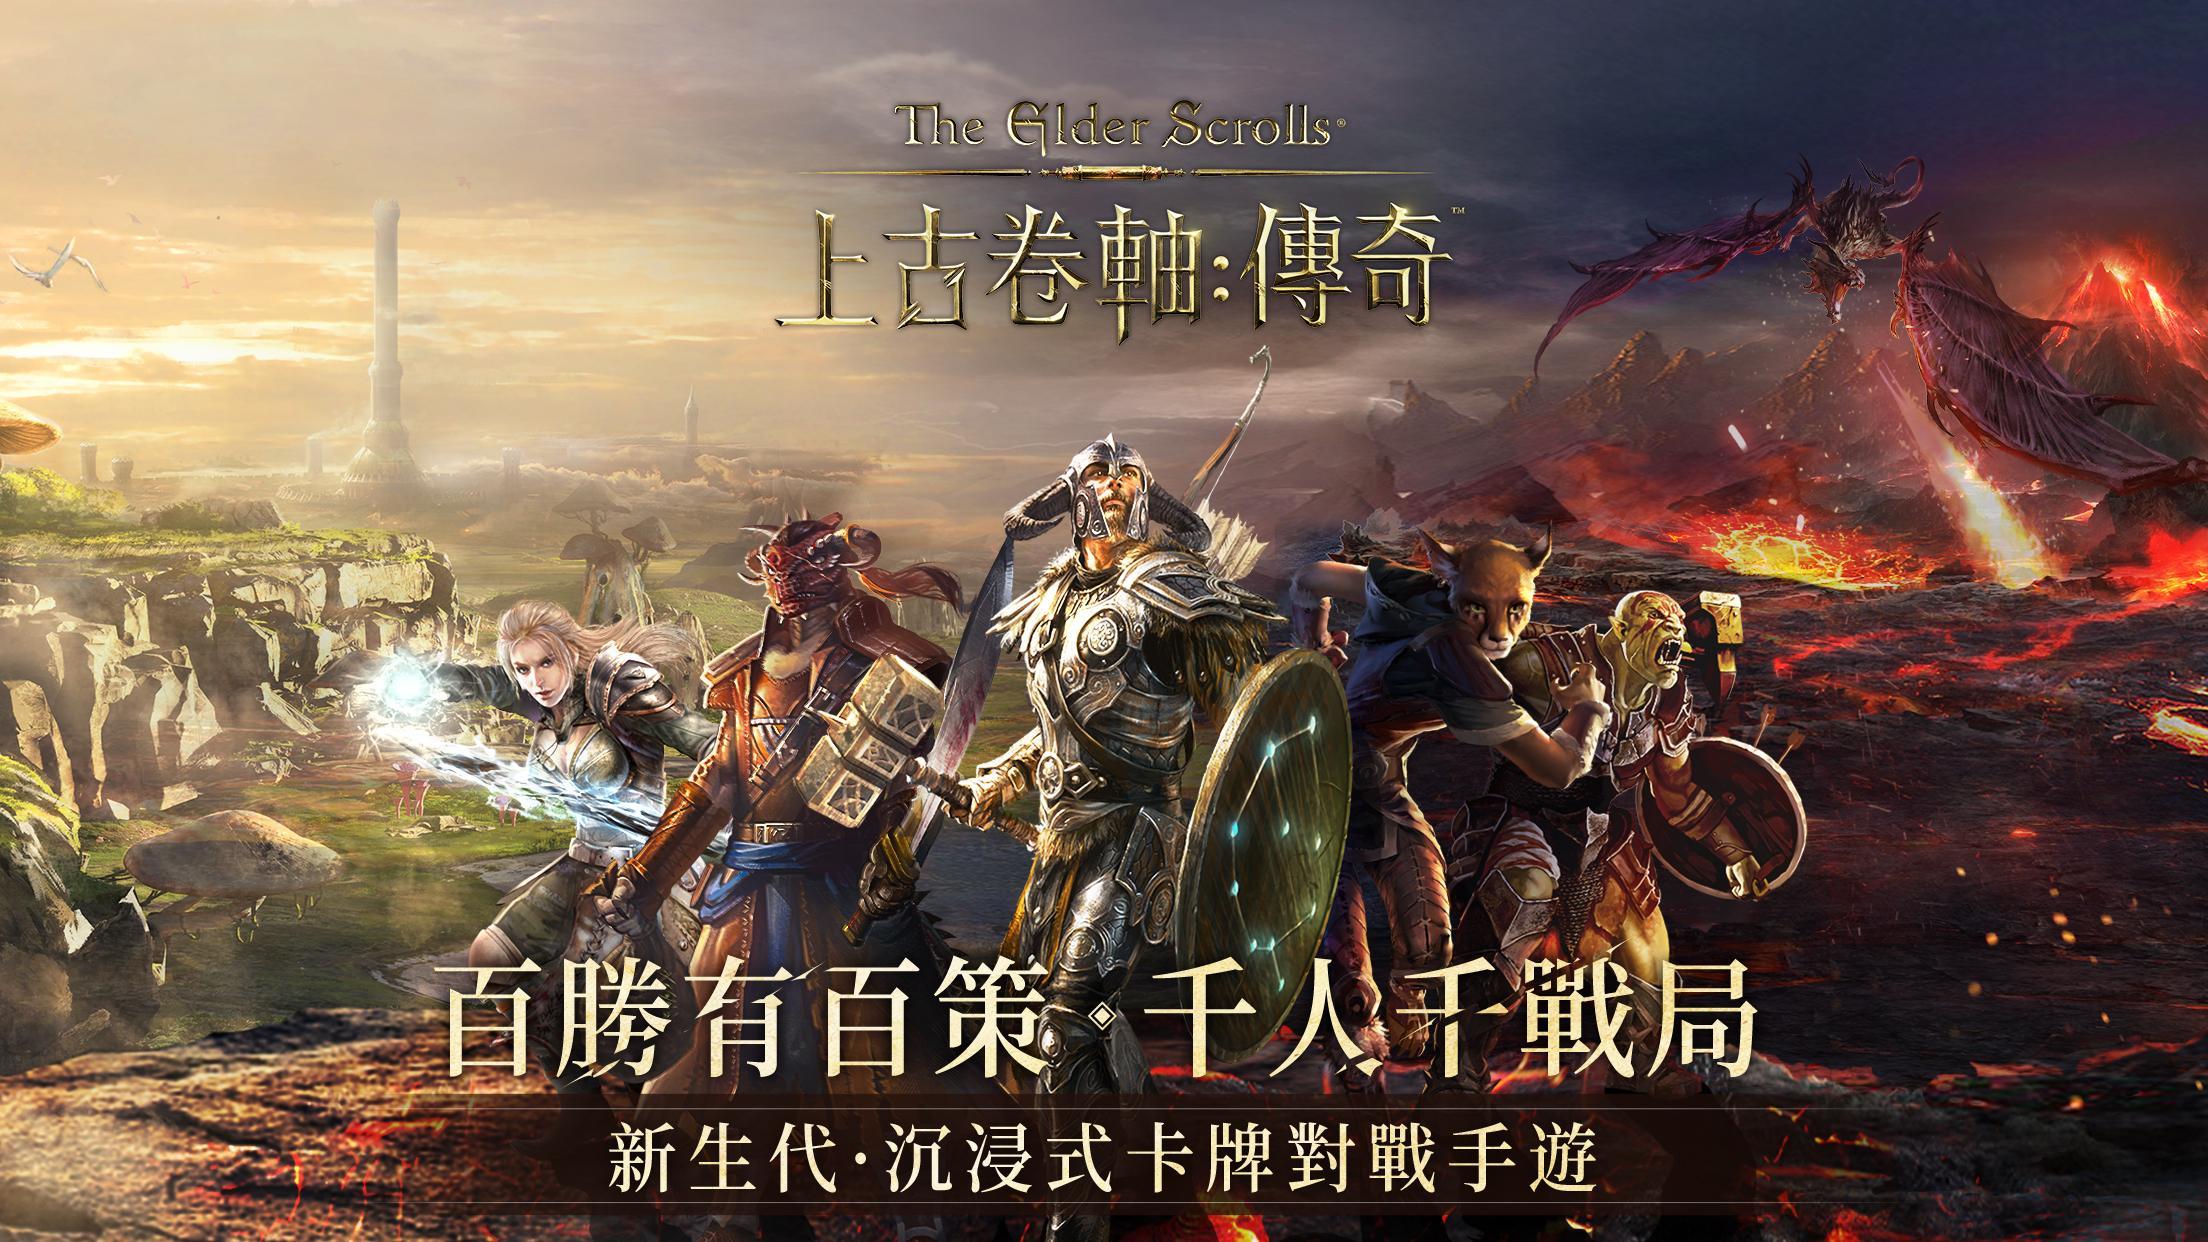 Screenshot 1 of The Elder Scrolls: Легенды Азии 1.2.1